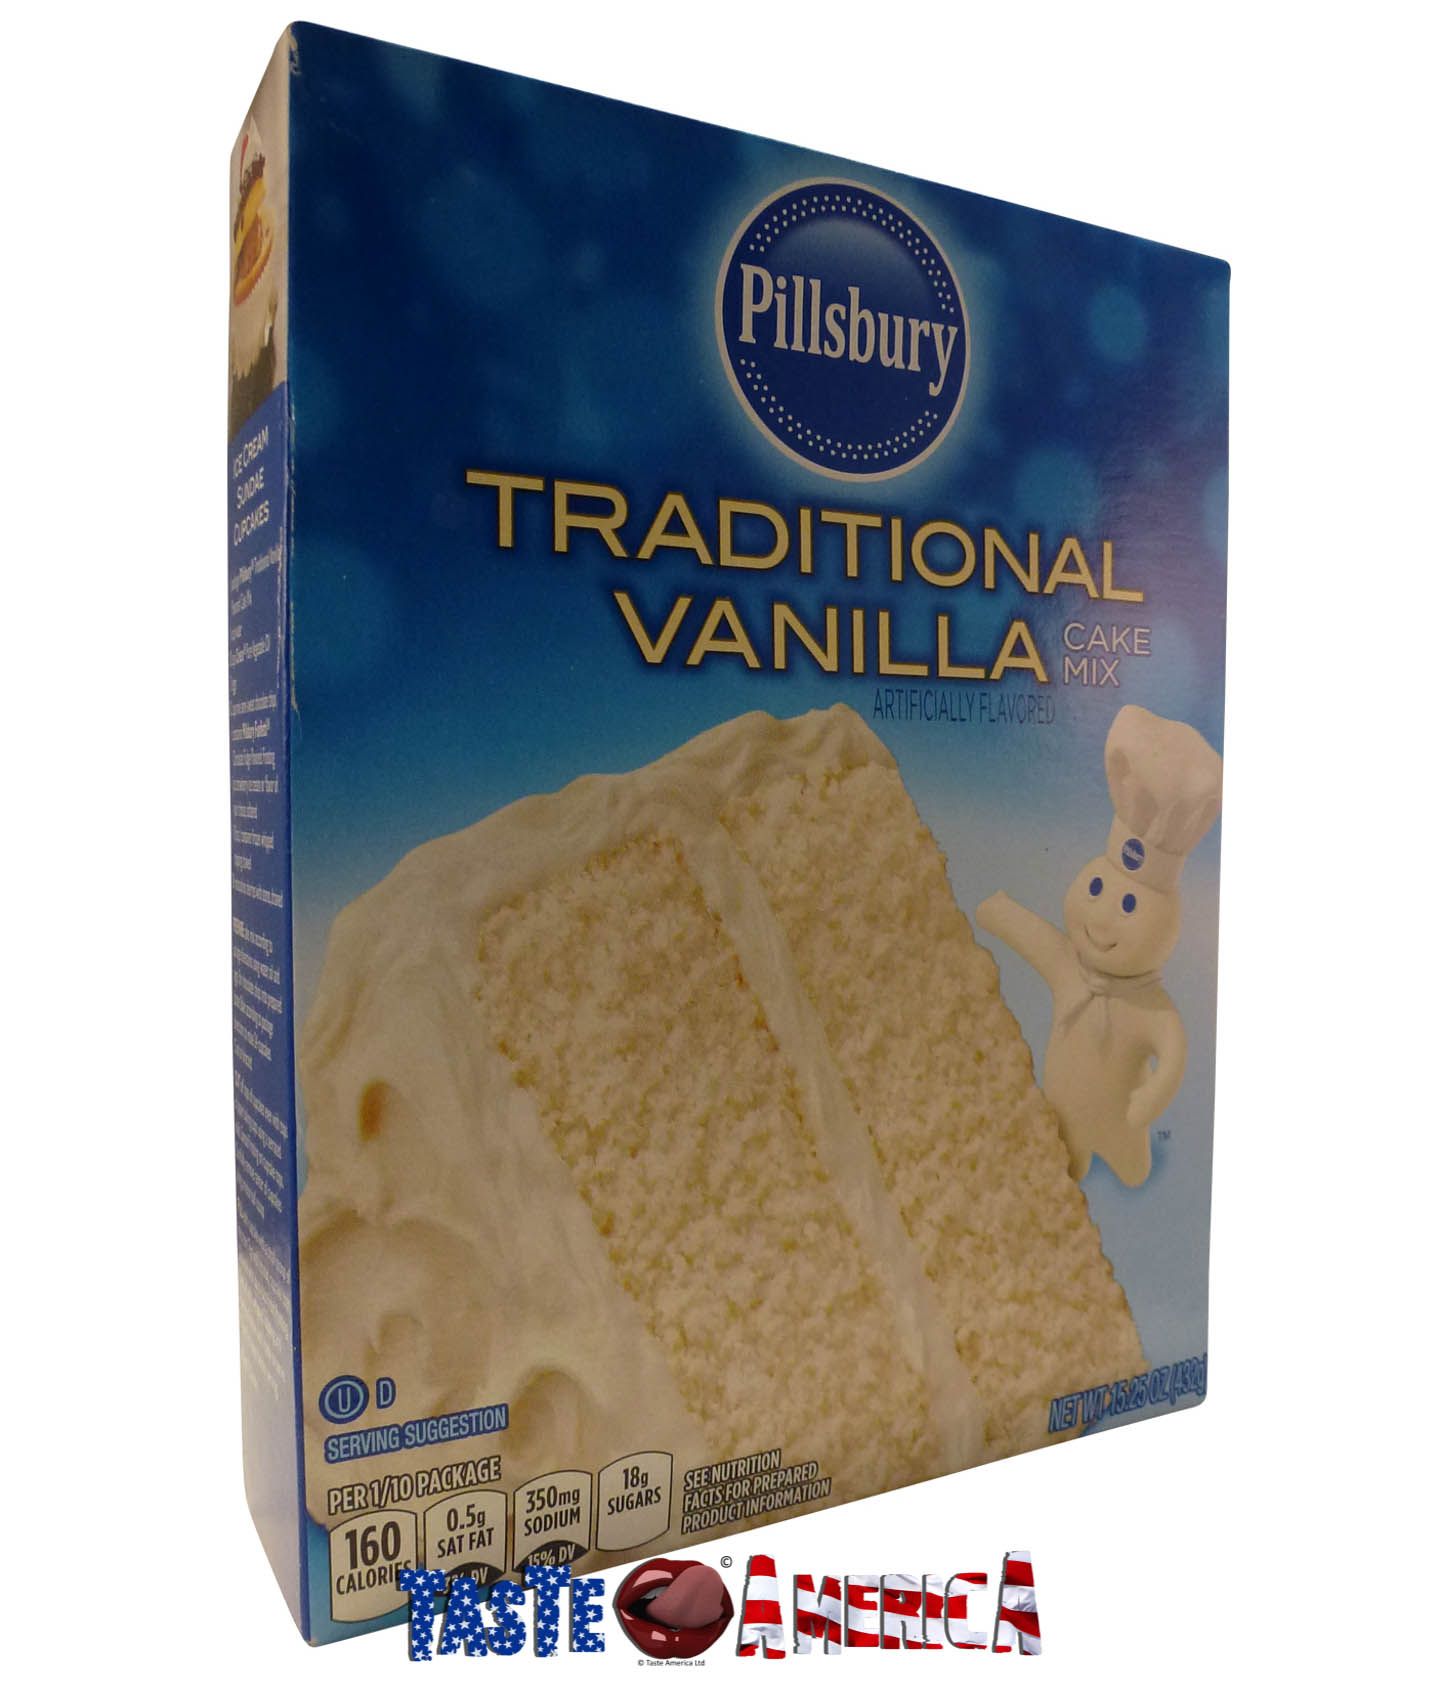 Pillsbury Premium Egg-Free Vanilla Cake Mix - General Mills Foodservice